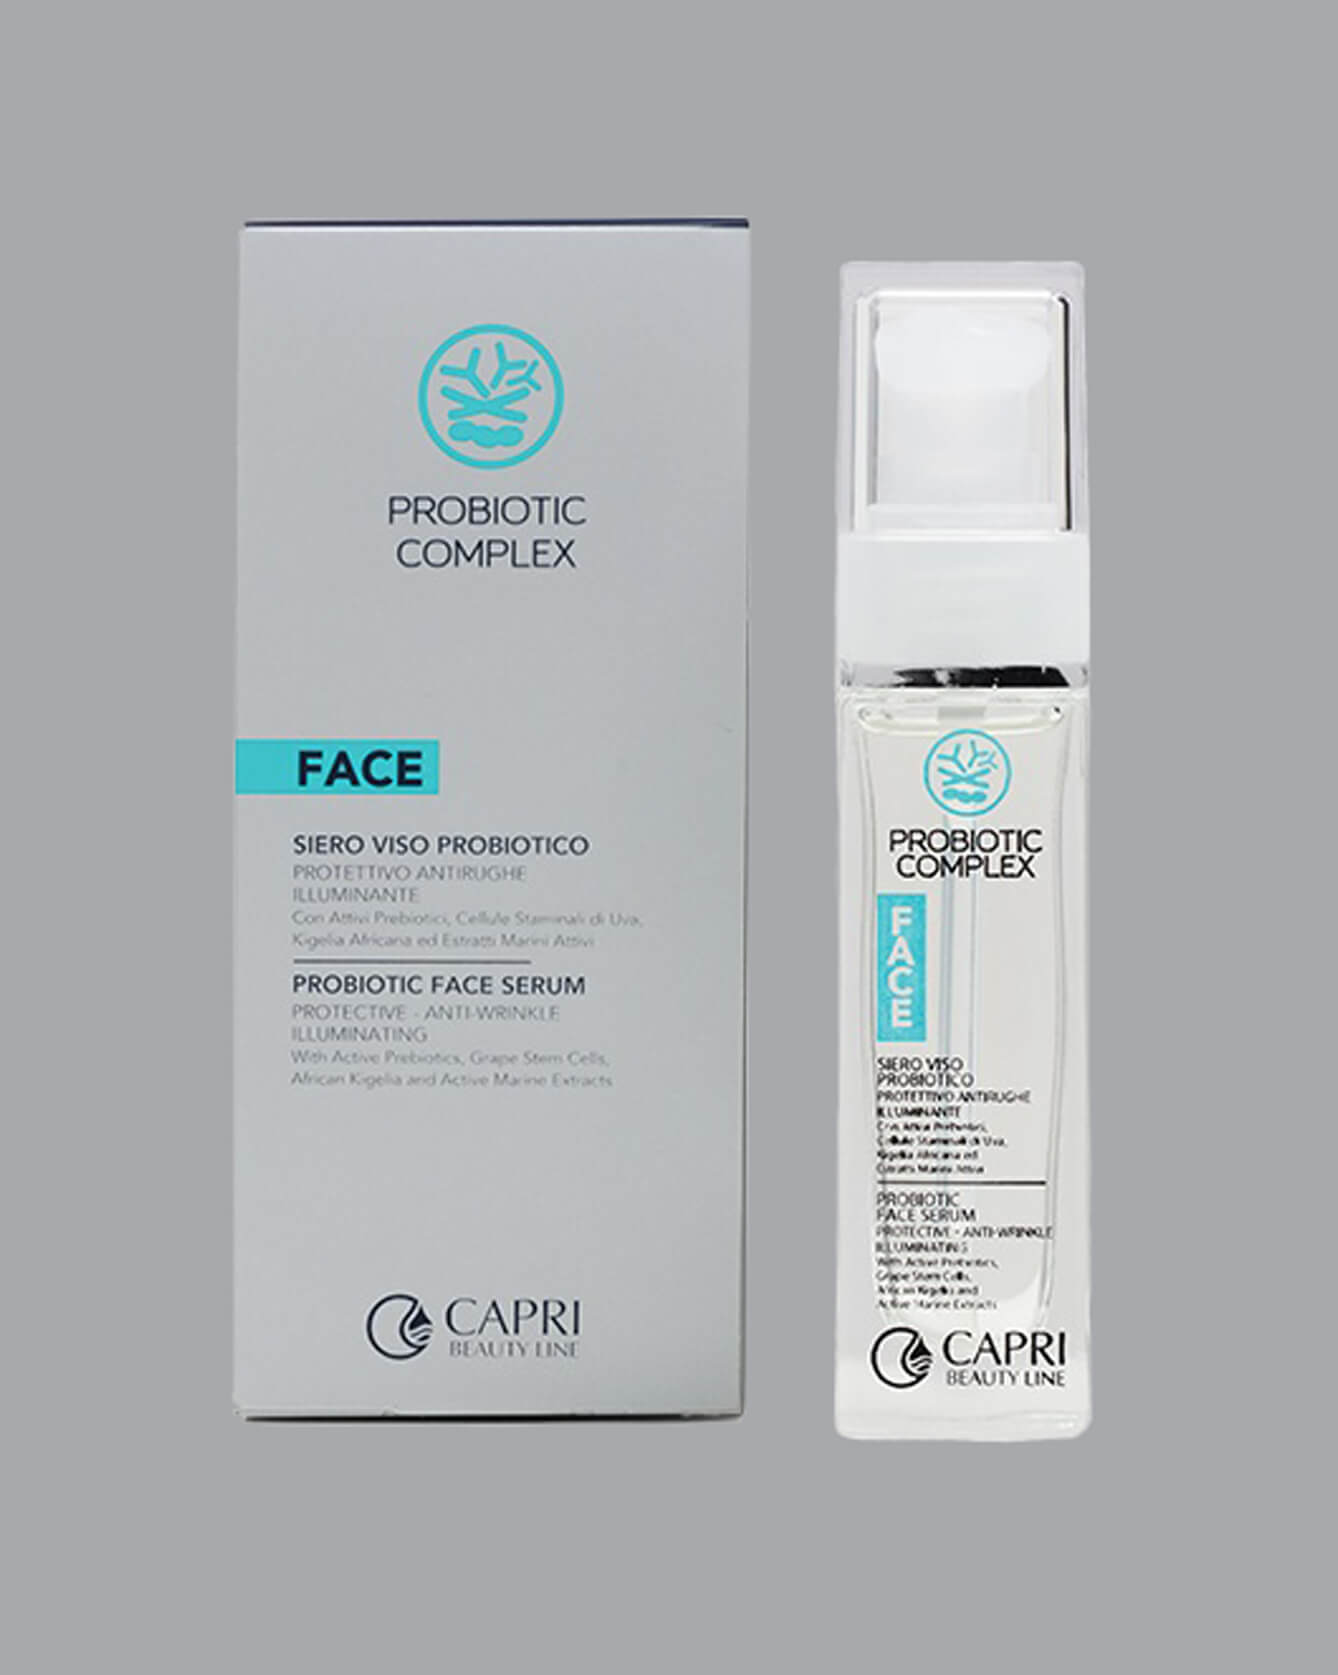 Product photo of Capri Beauty face serum.